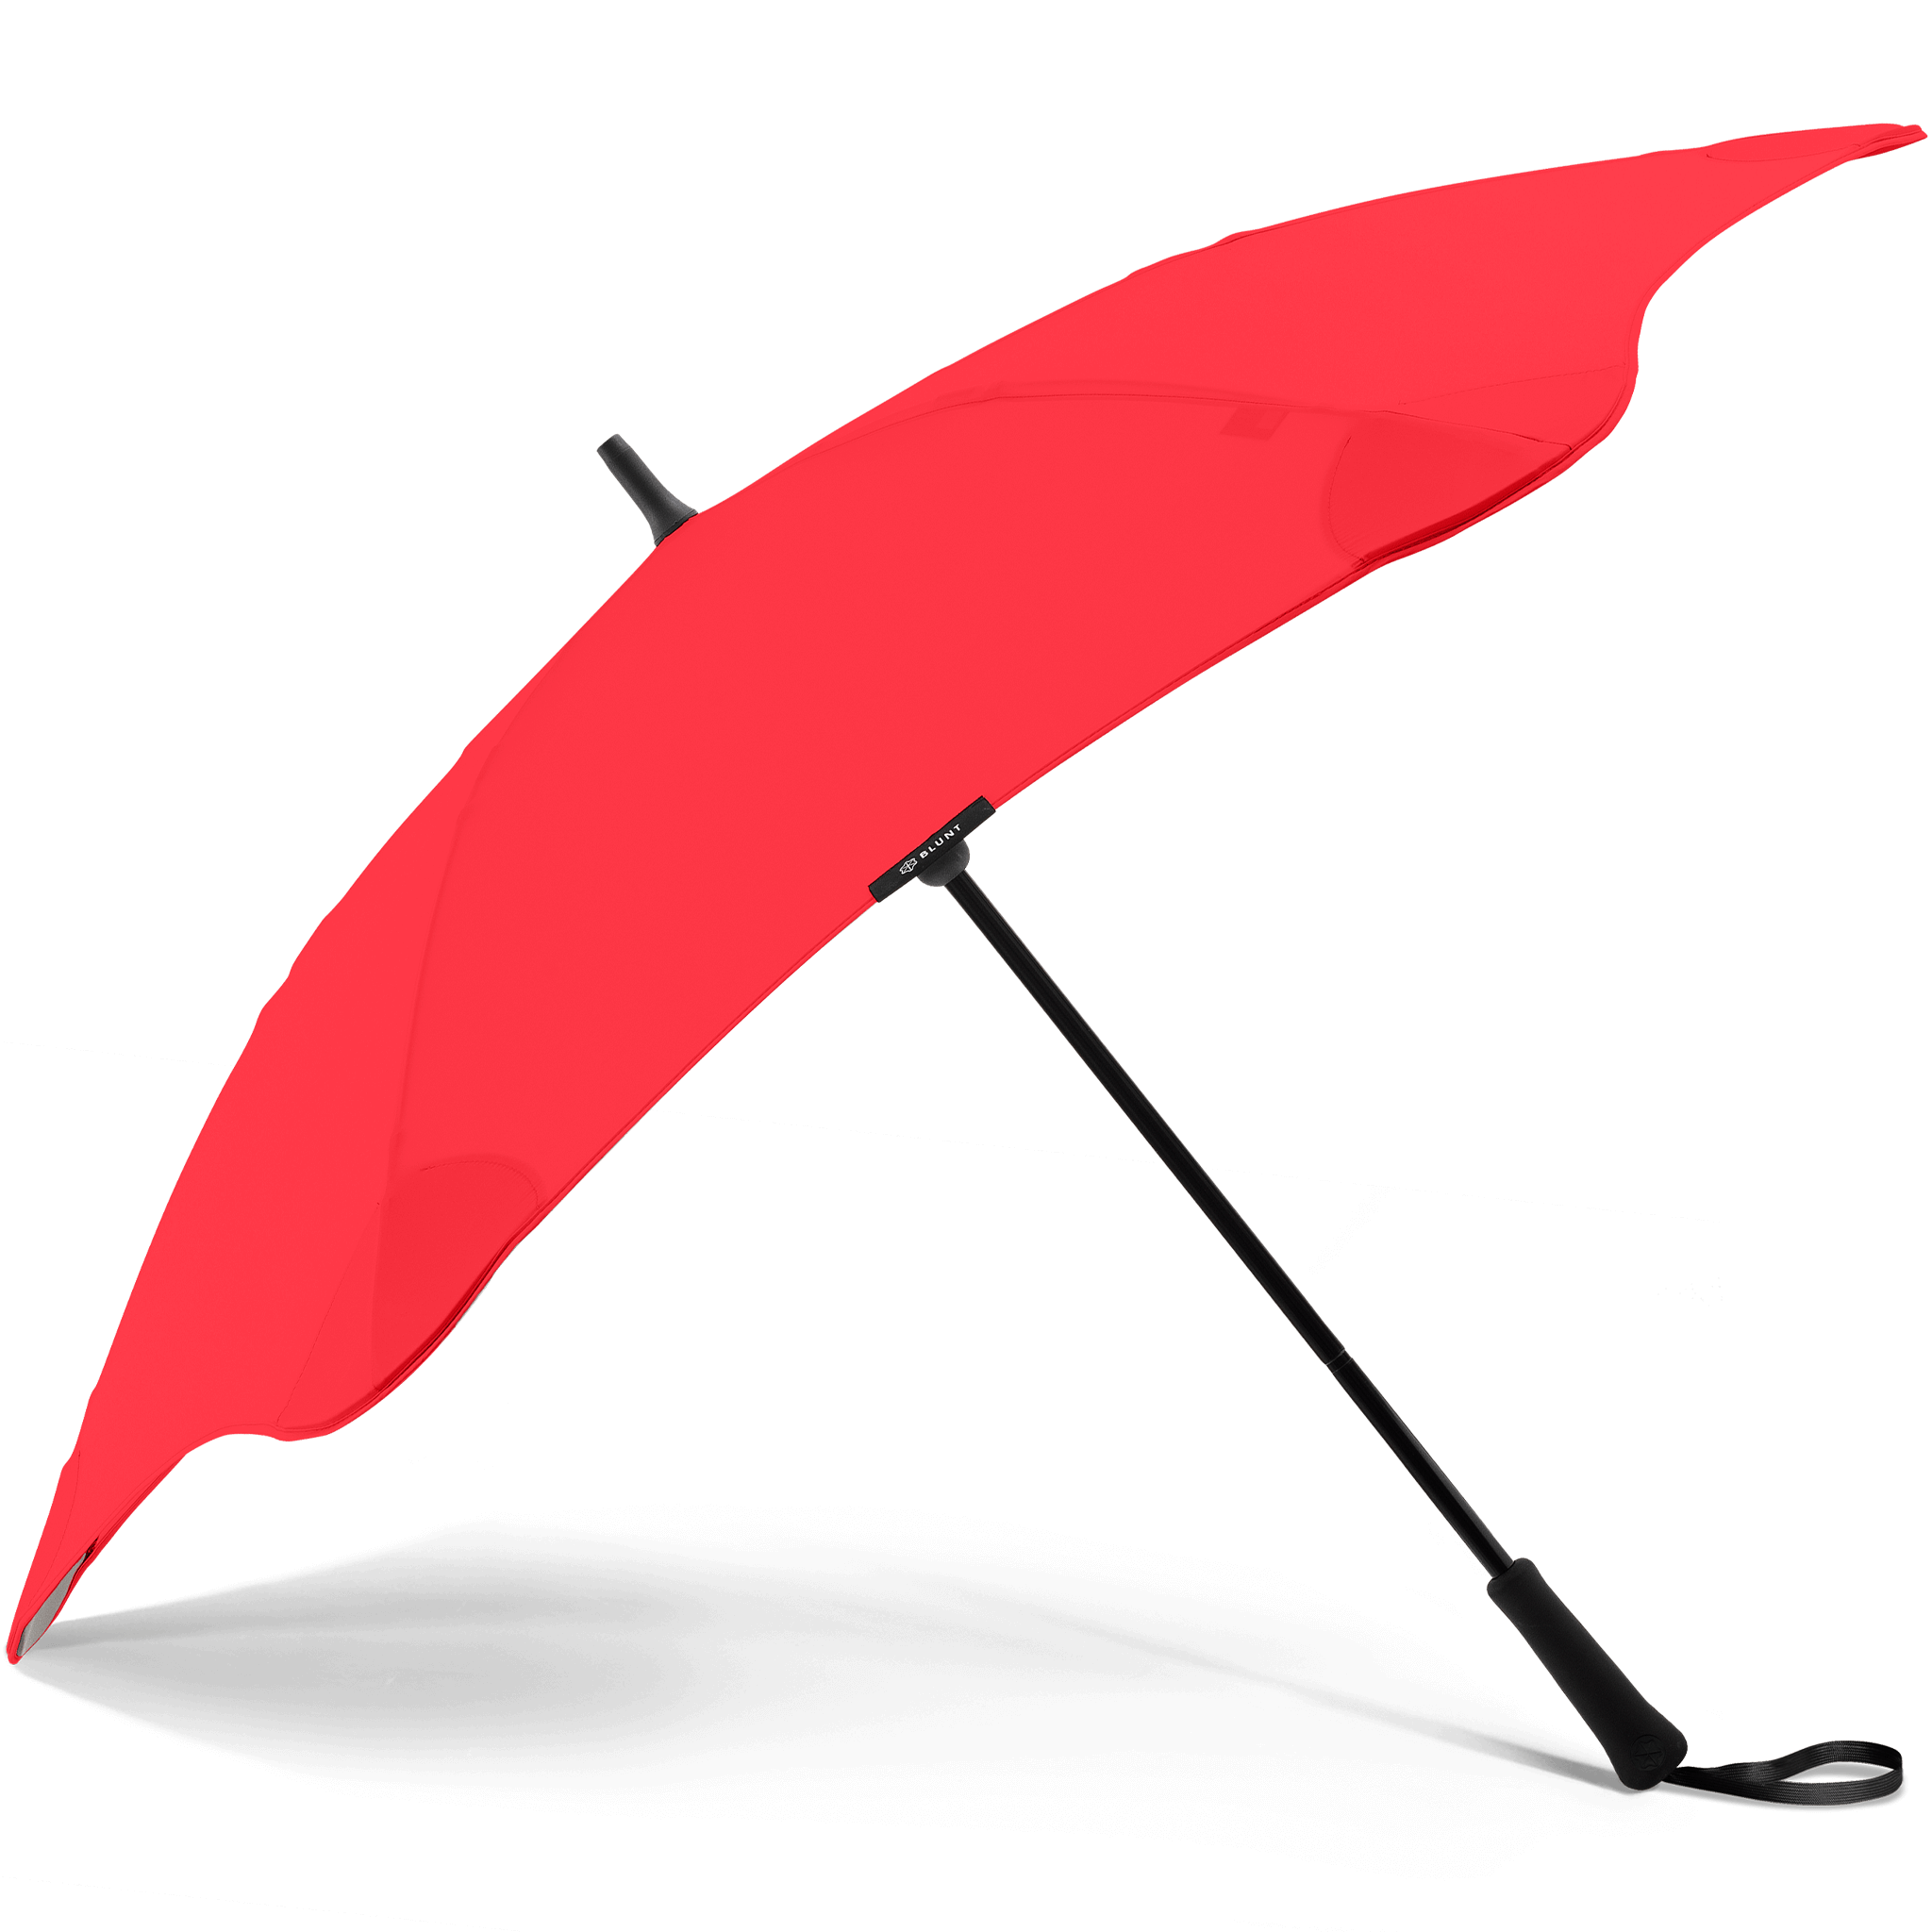 Blunt Metro classic 2020 umbrella Red outside